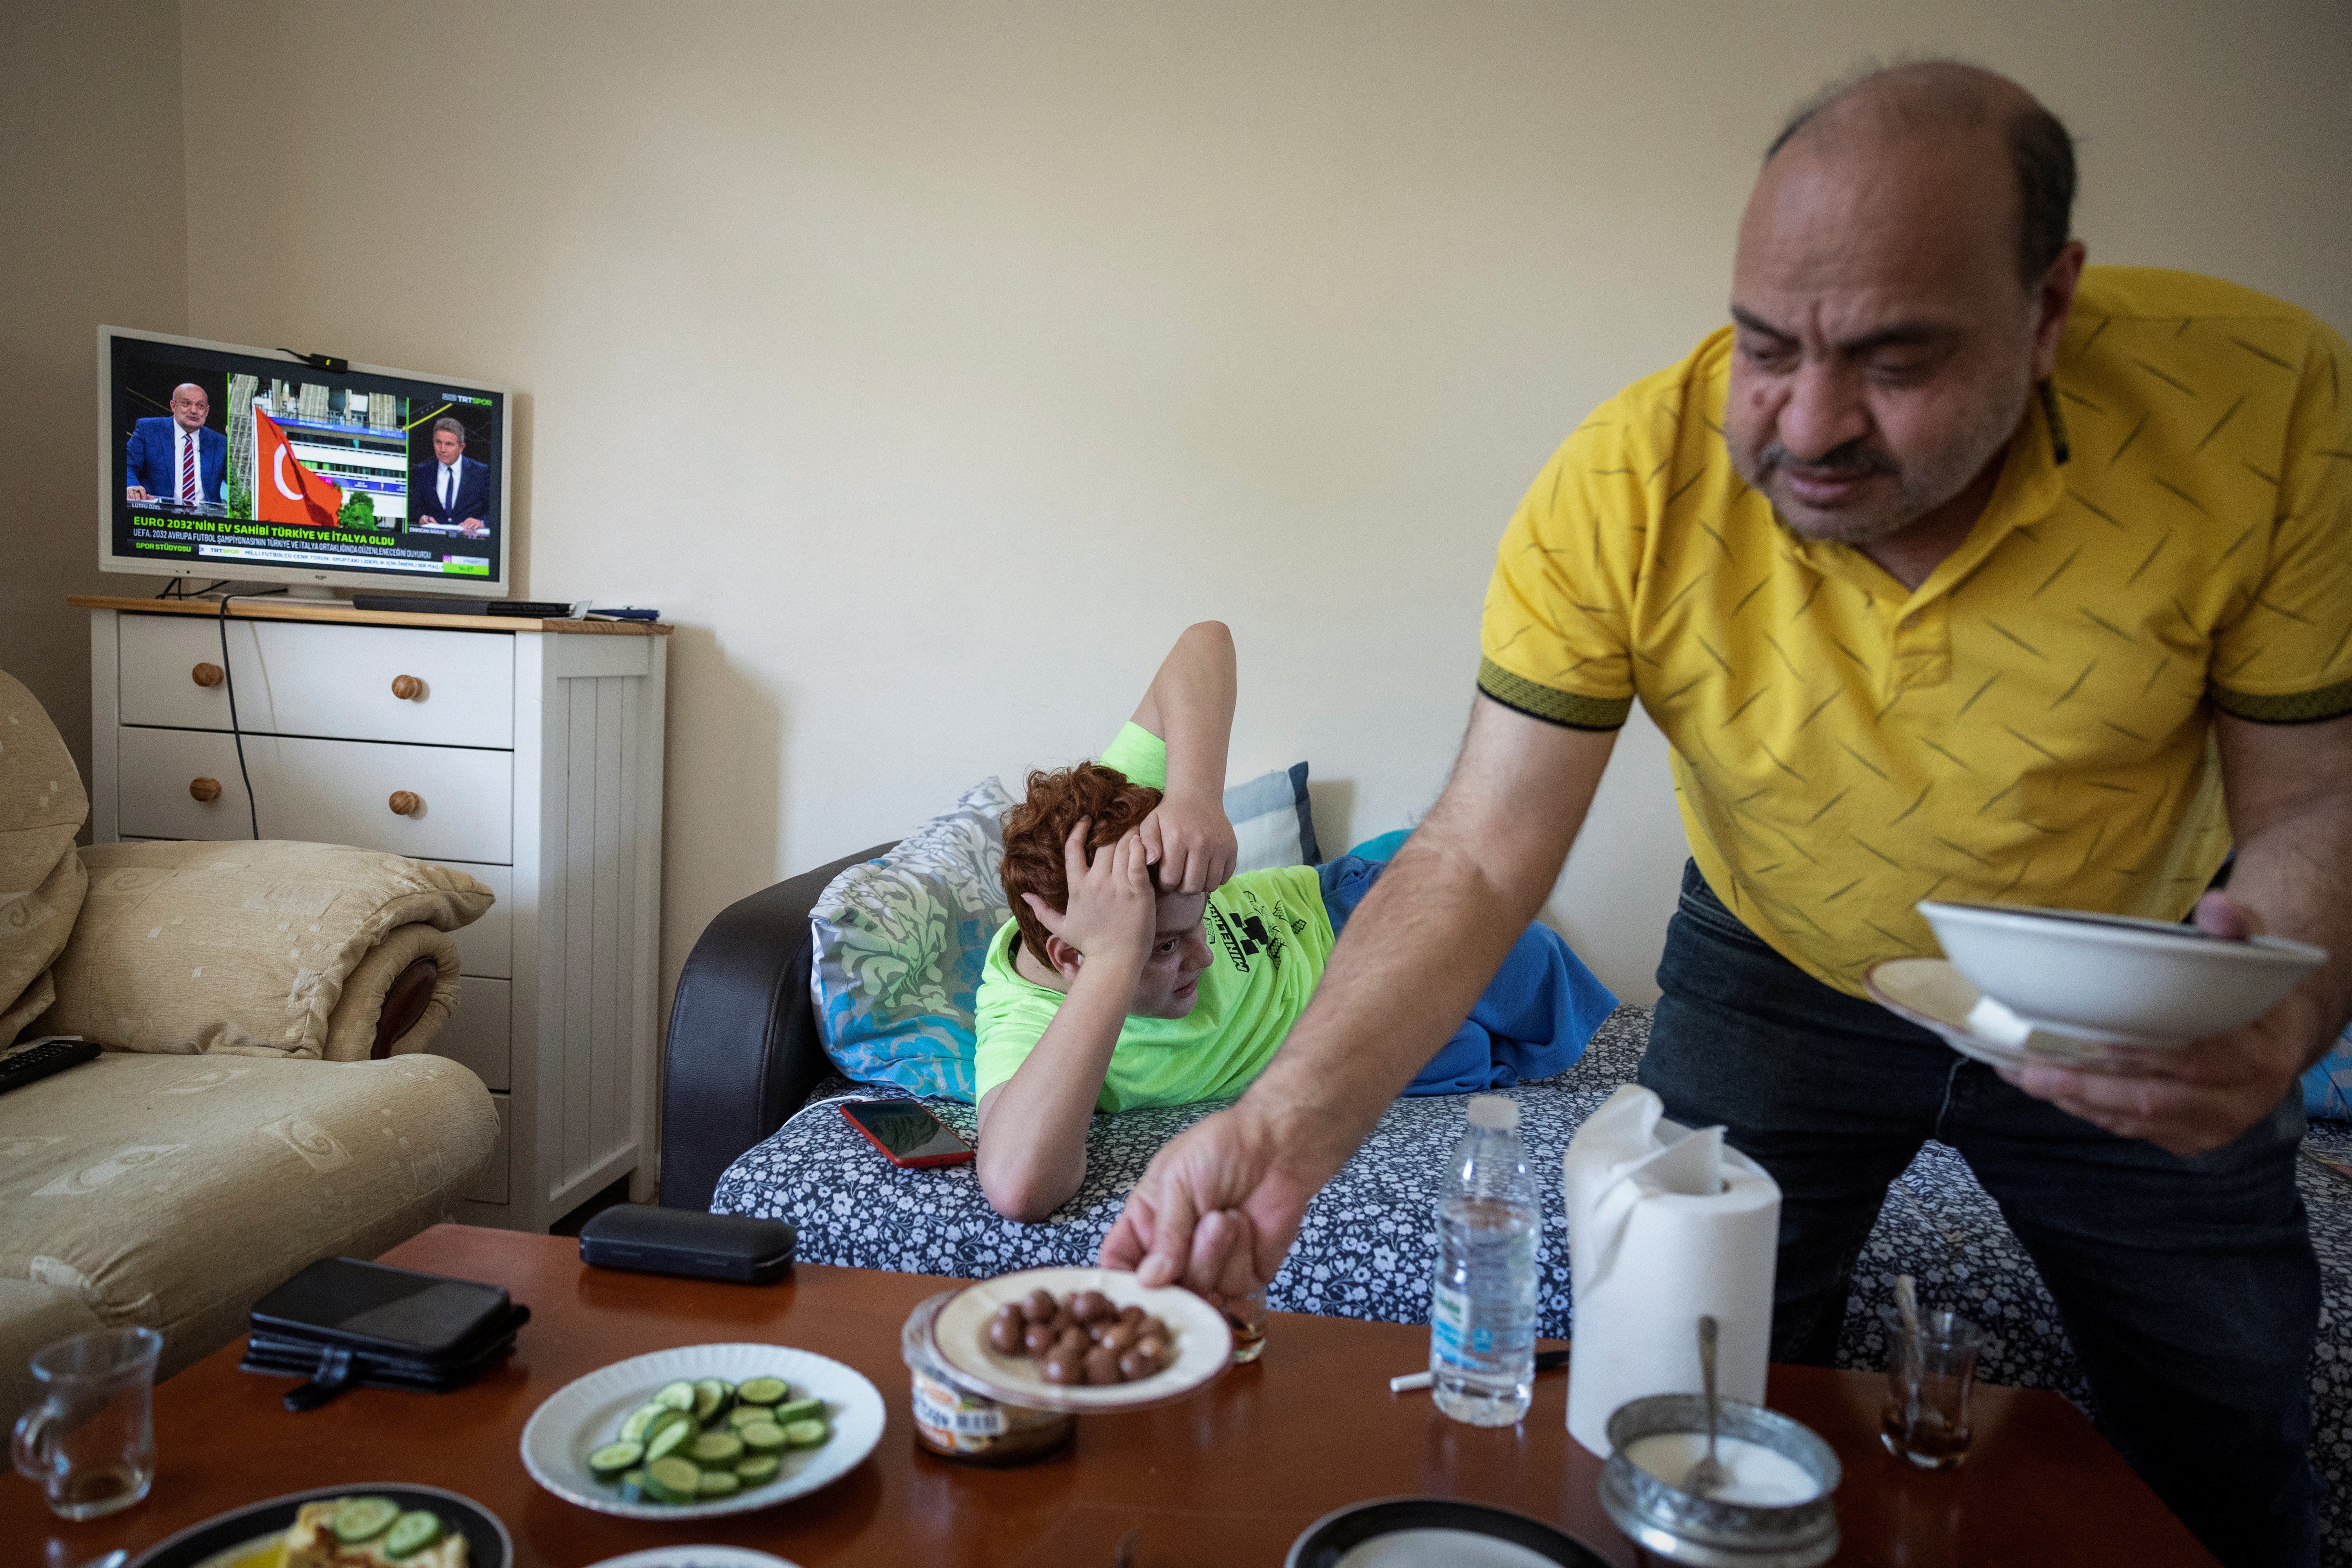 Hasan, prepares dinner for his son Mehmet, at his flat in London